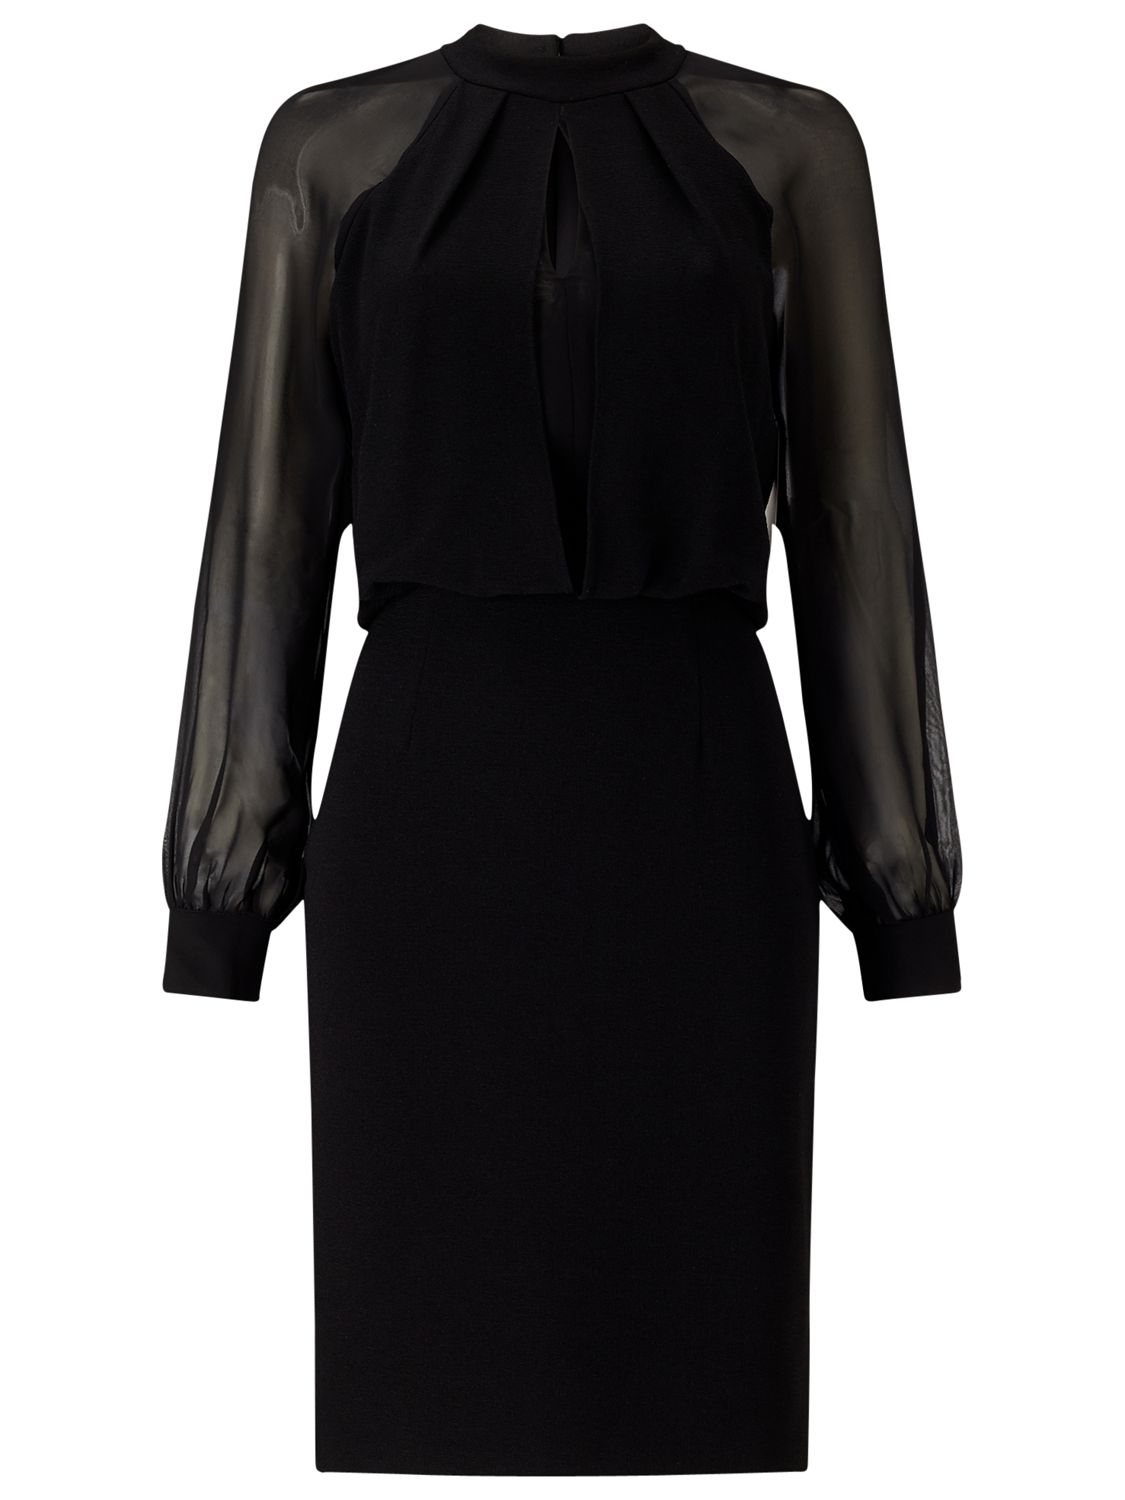 Adrianna Papell Chiffon Blouse Dress, Black at John Lewis & Partners